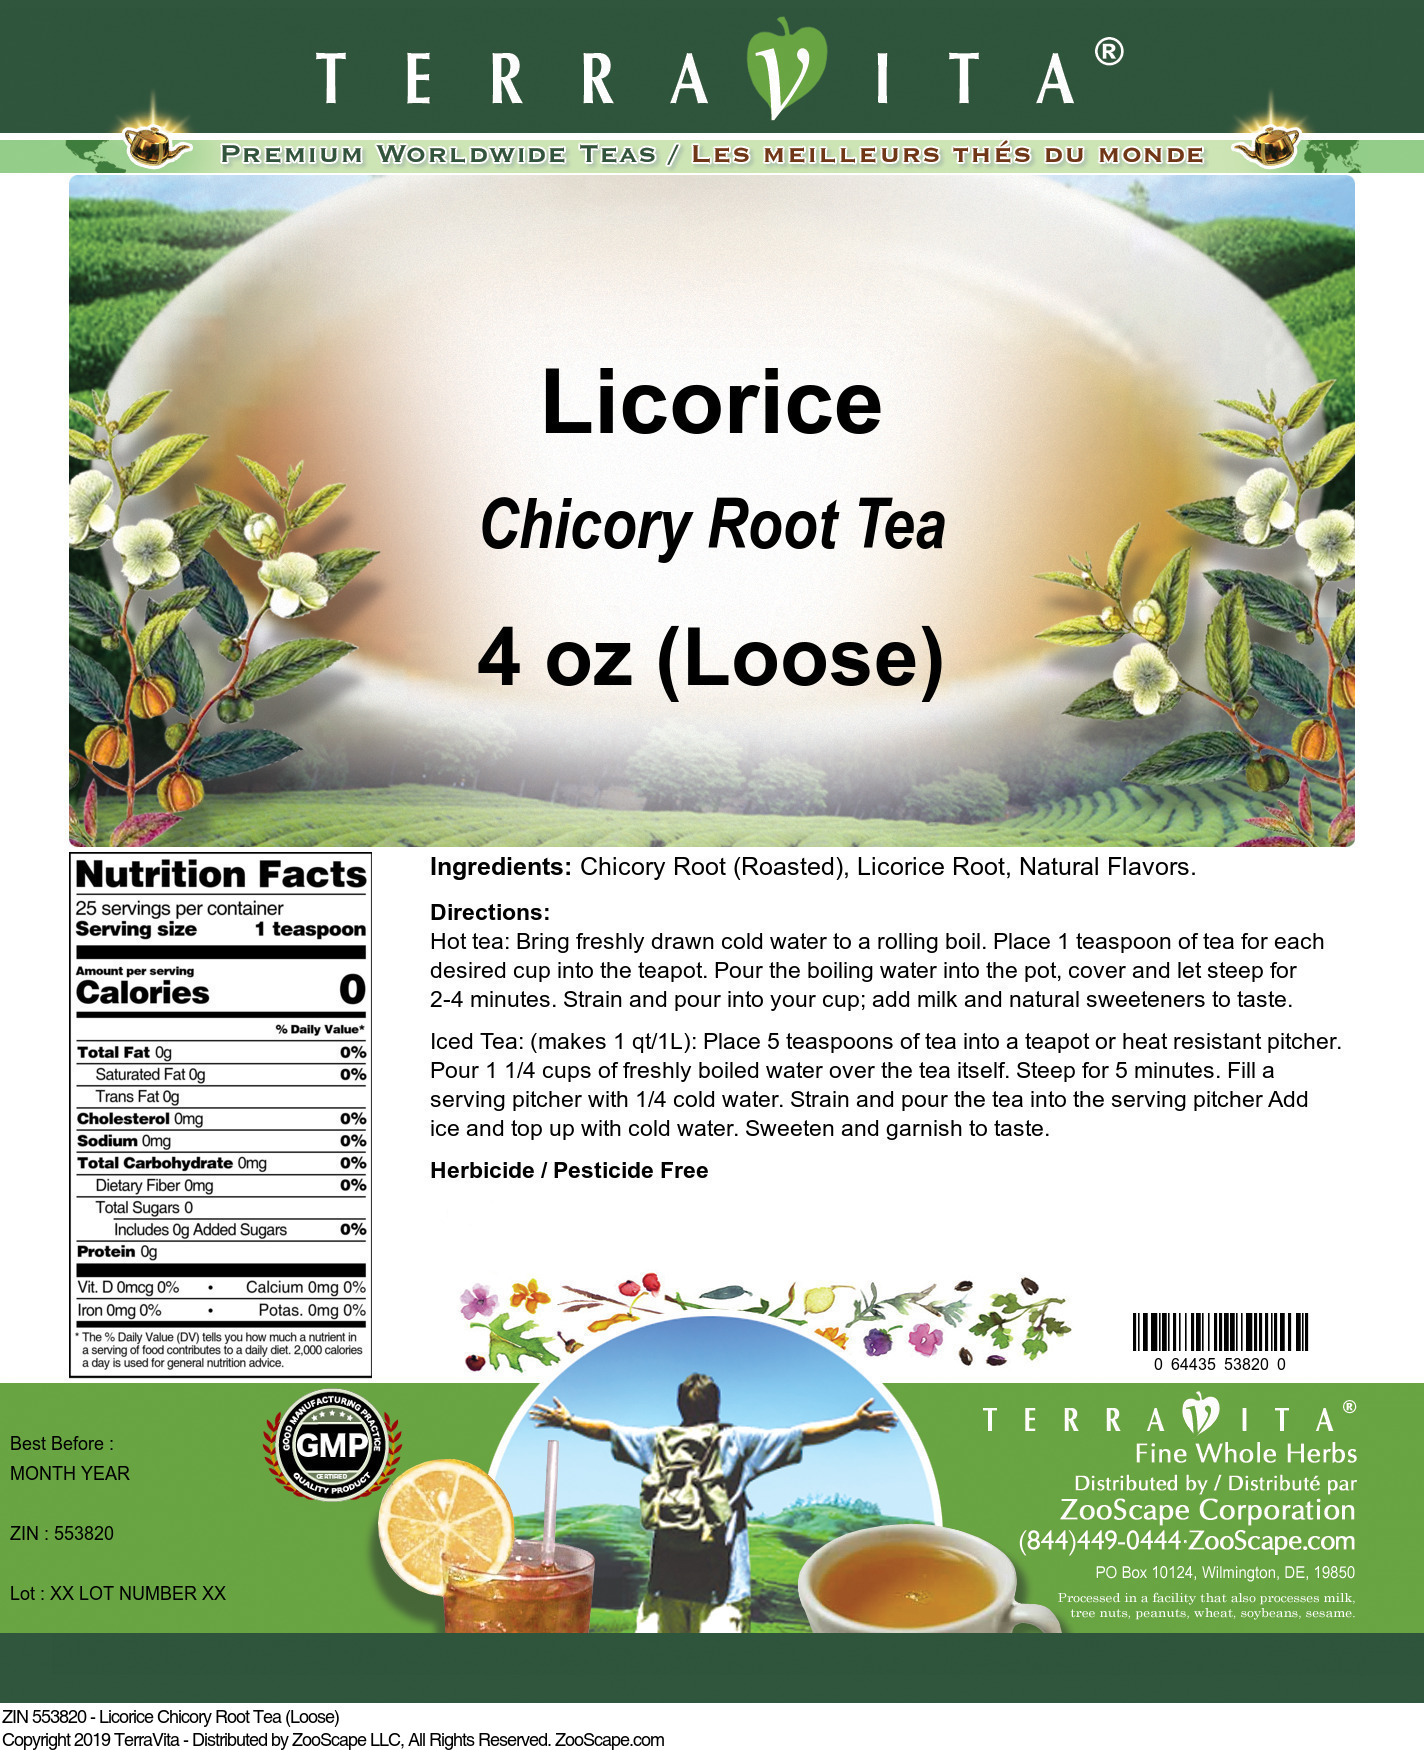 Licorice Chicory Root Tea (Loose) - Label